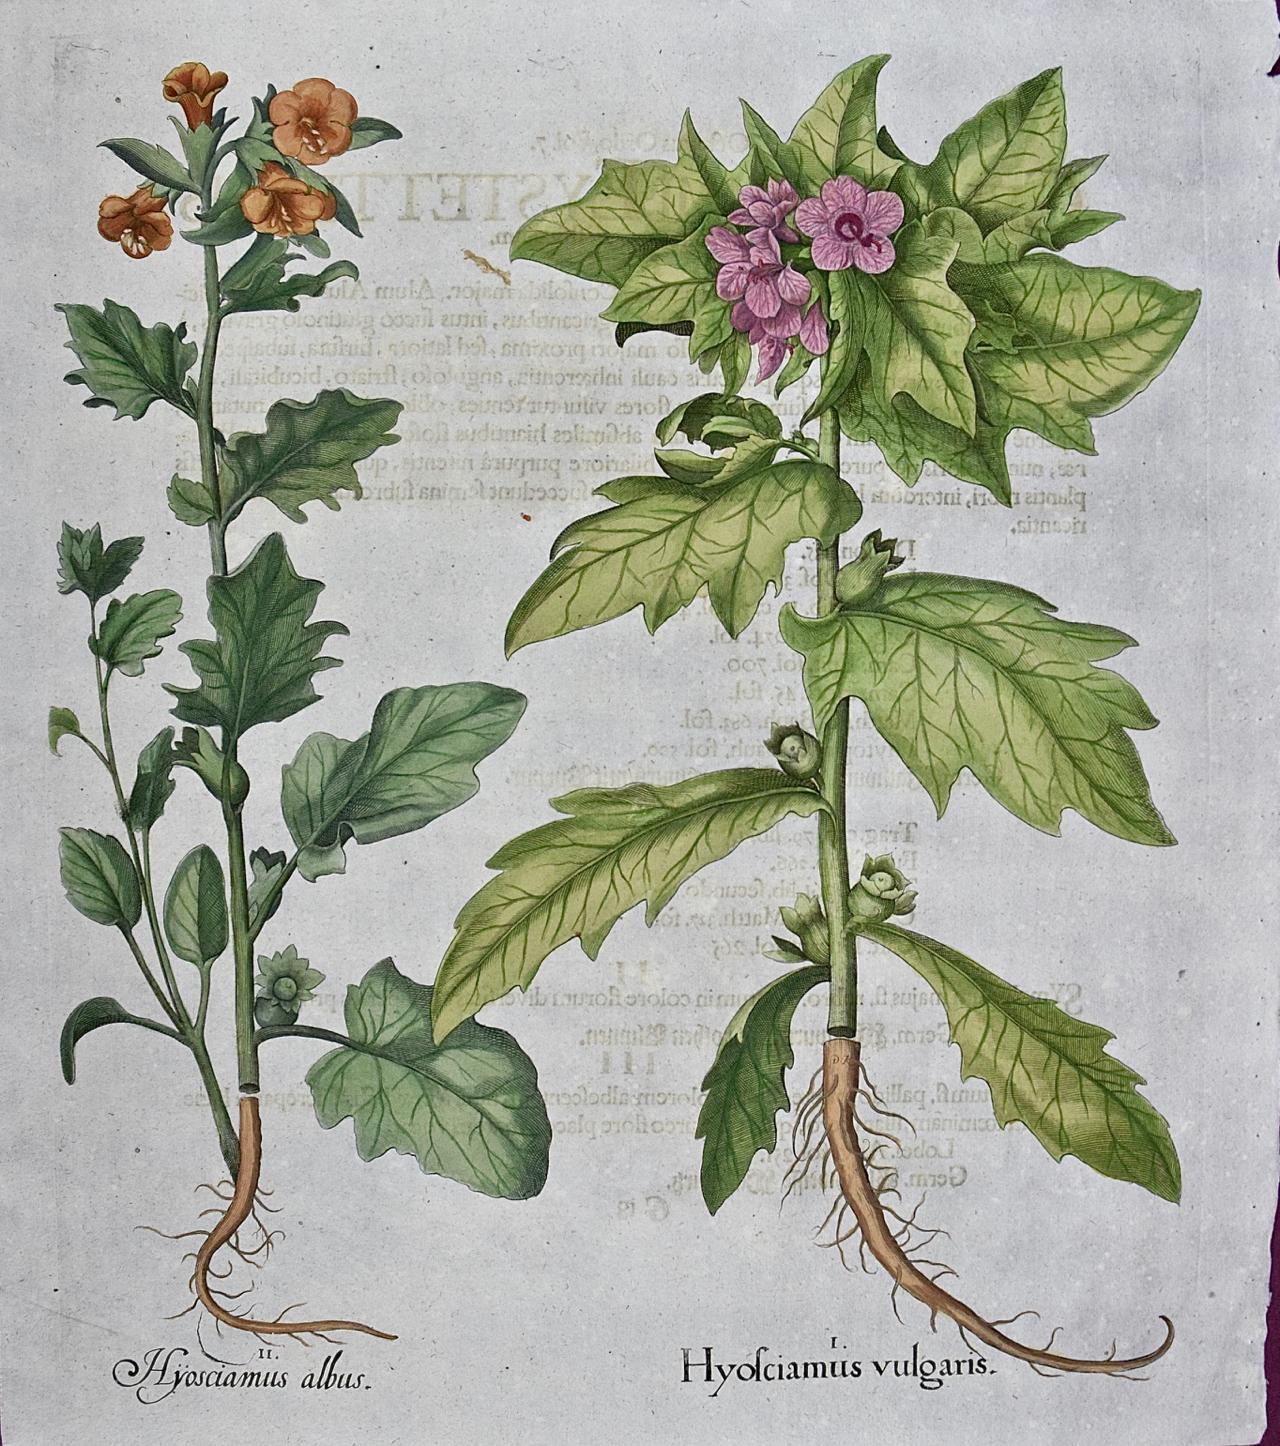 Flowering Henbane : A Besler 18th Century Hand-colored Botanical Engraving